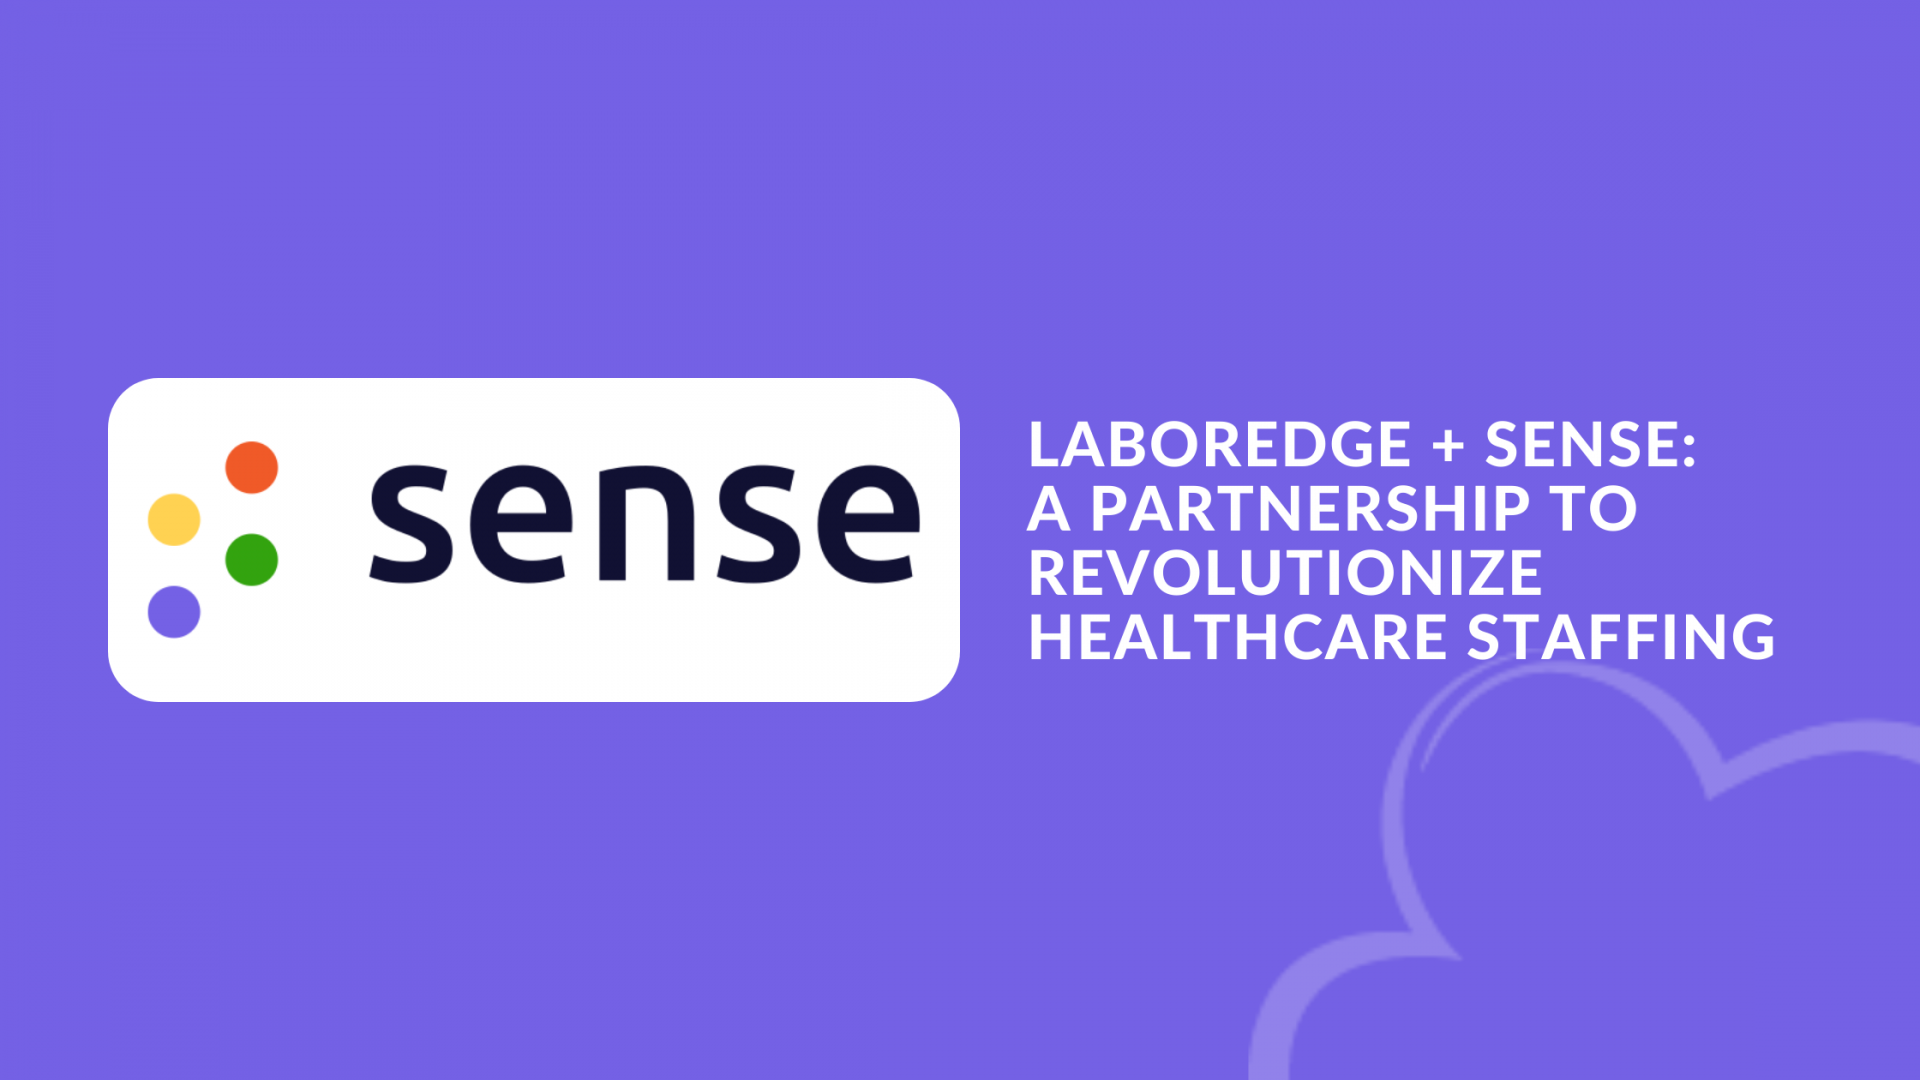 LaborEdge and Sense: A Partnership to Revolutionize Healthcare Staffing